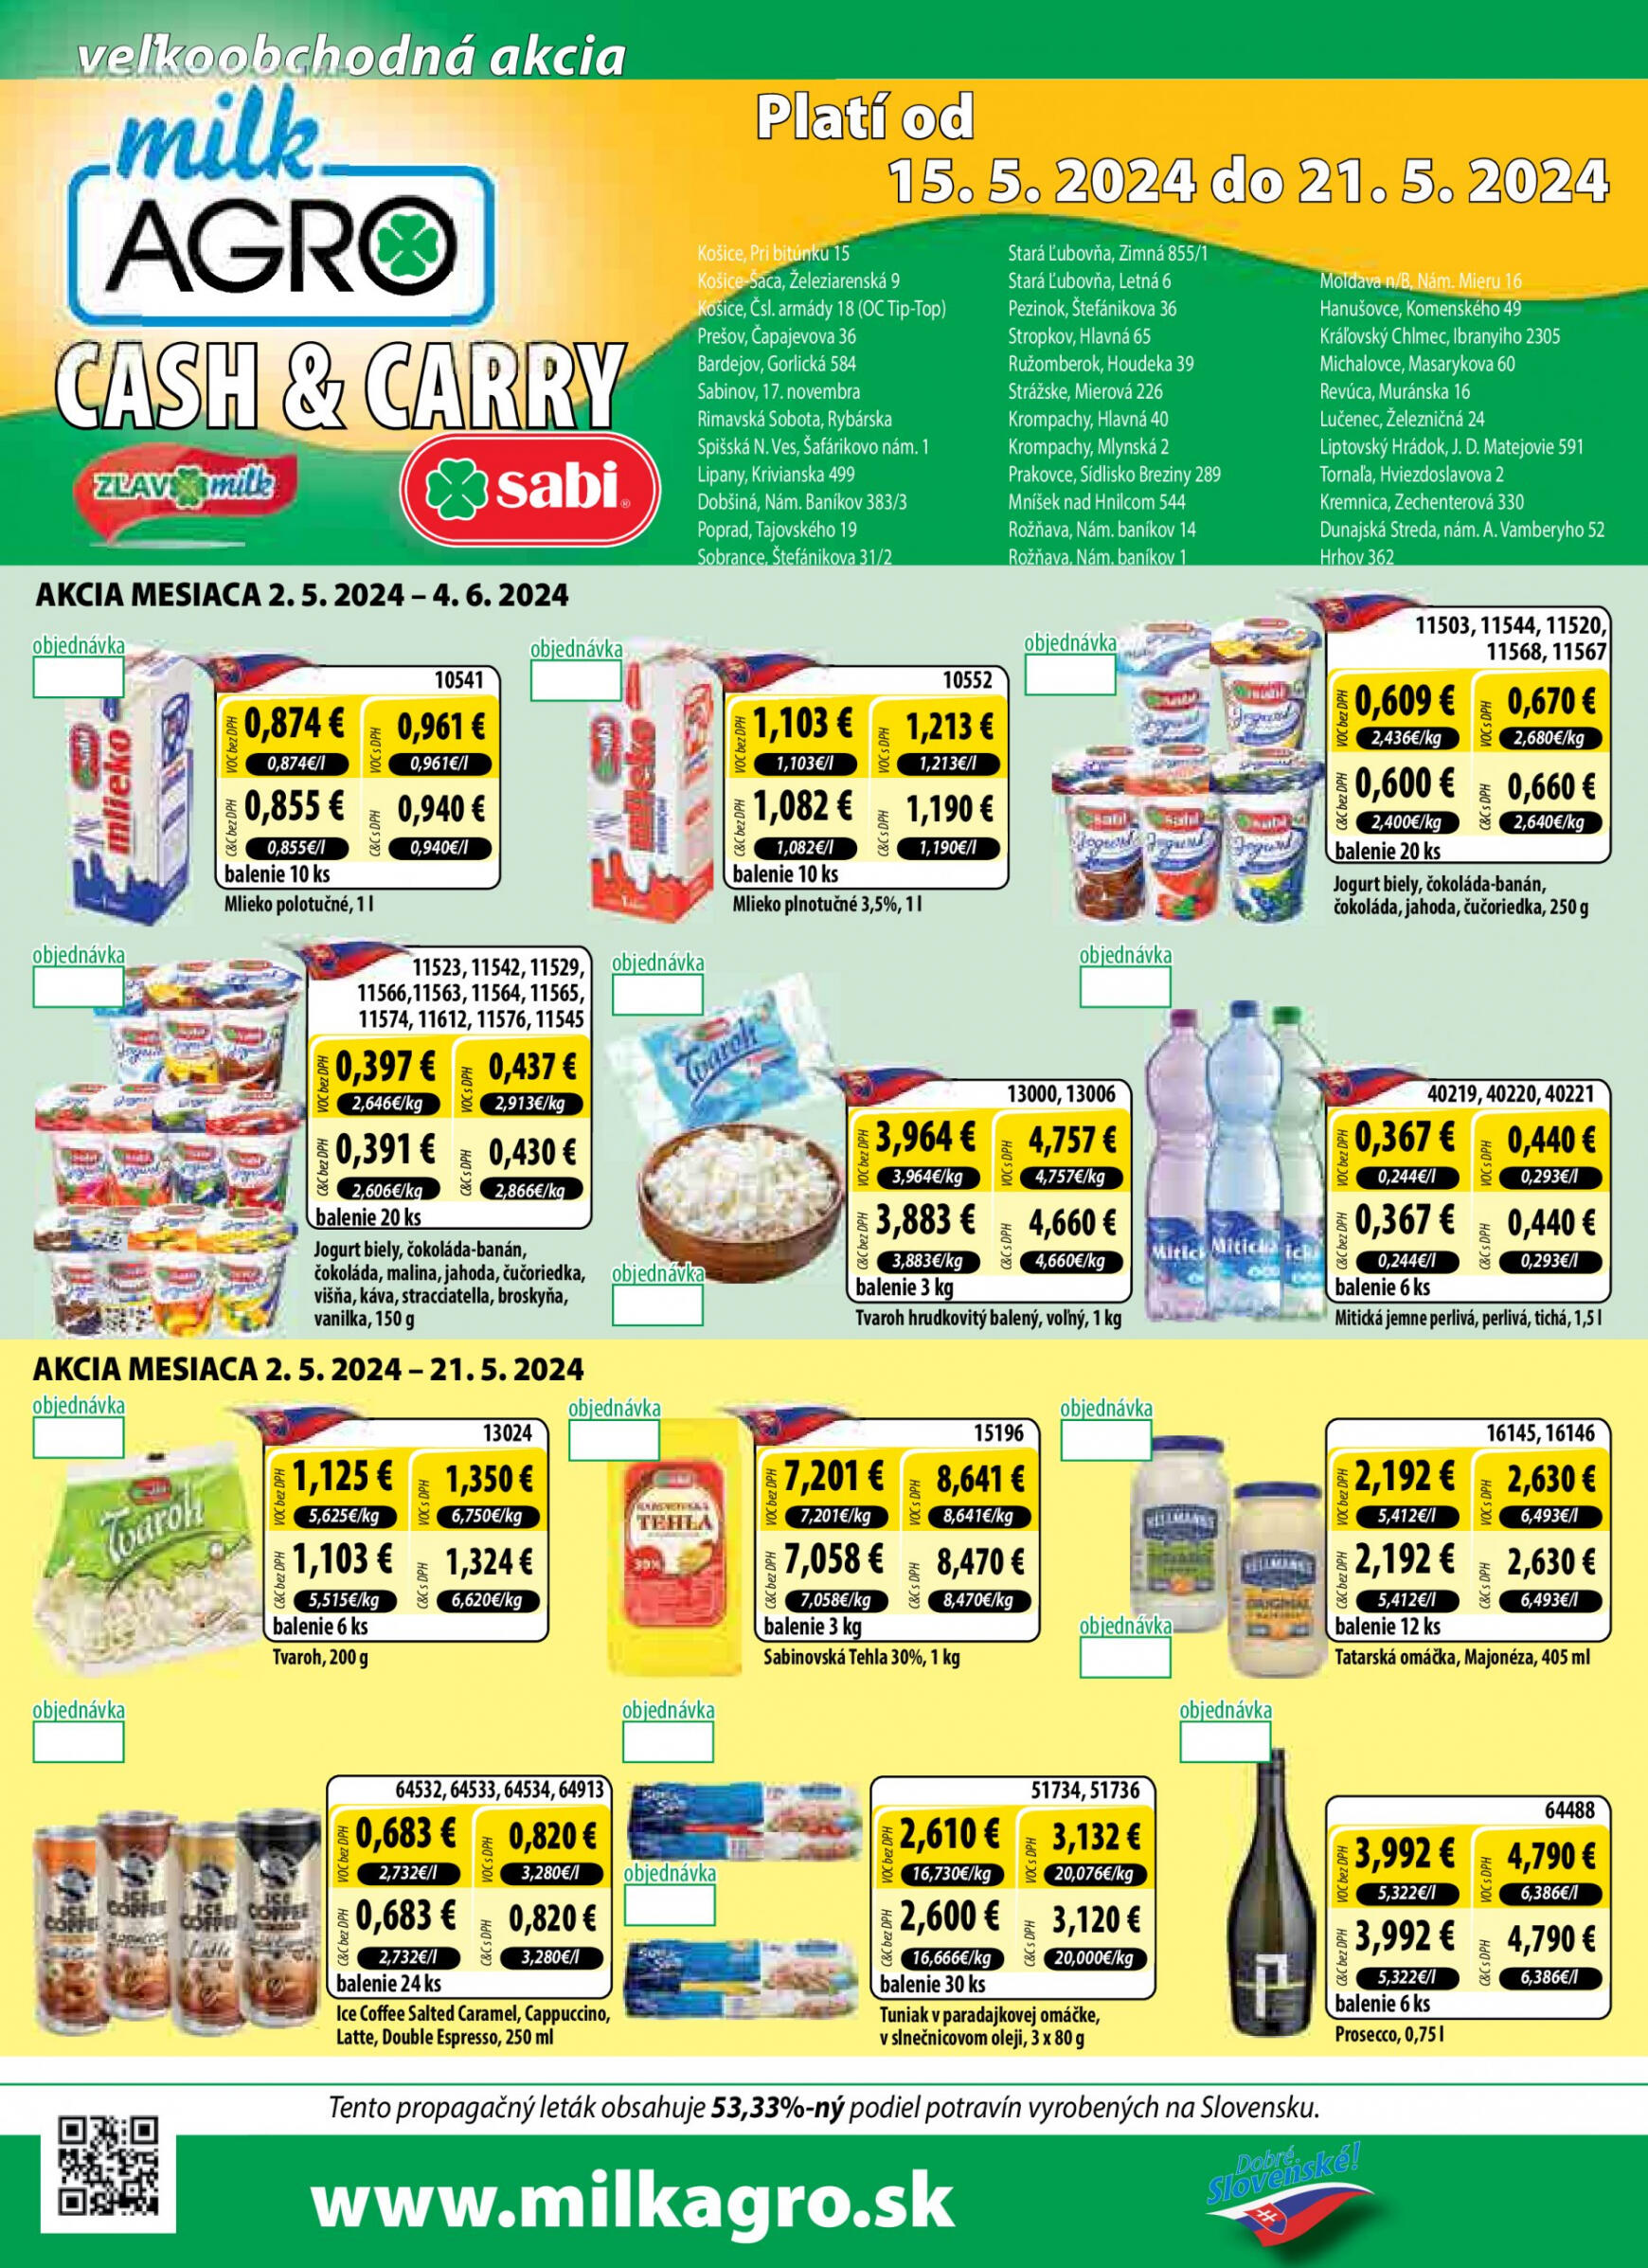 milk-agro - Milk Agro - Cash & Carry leták platný od 15.05. - 21.05.